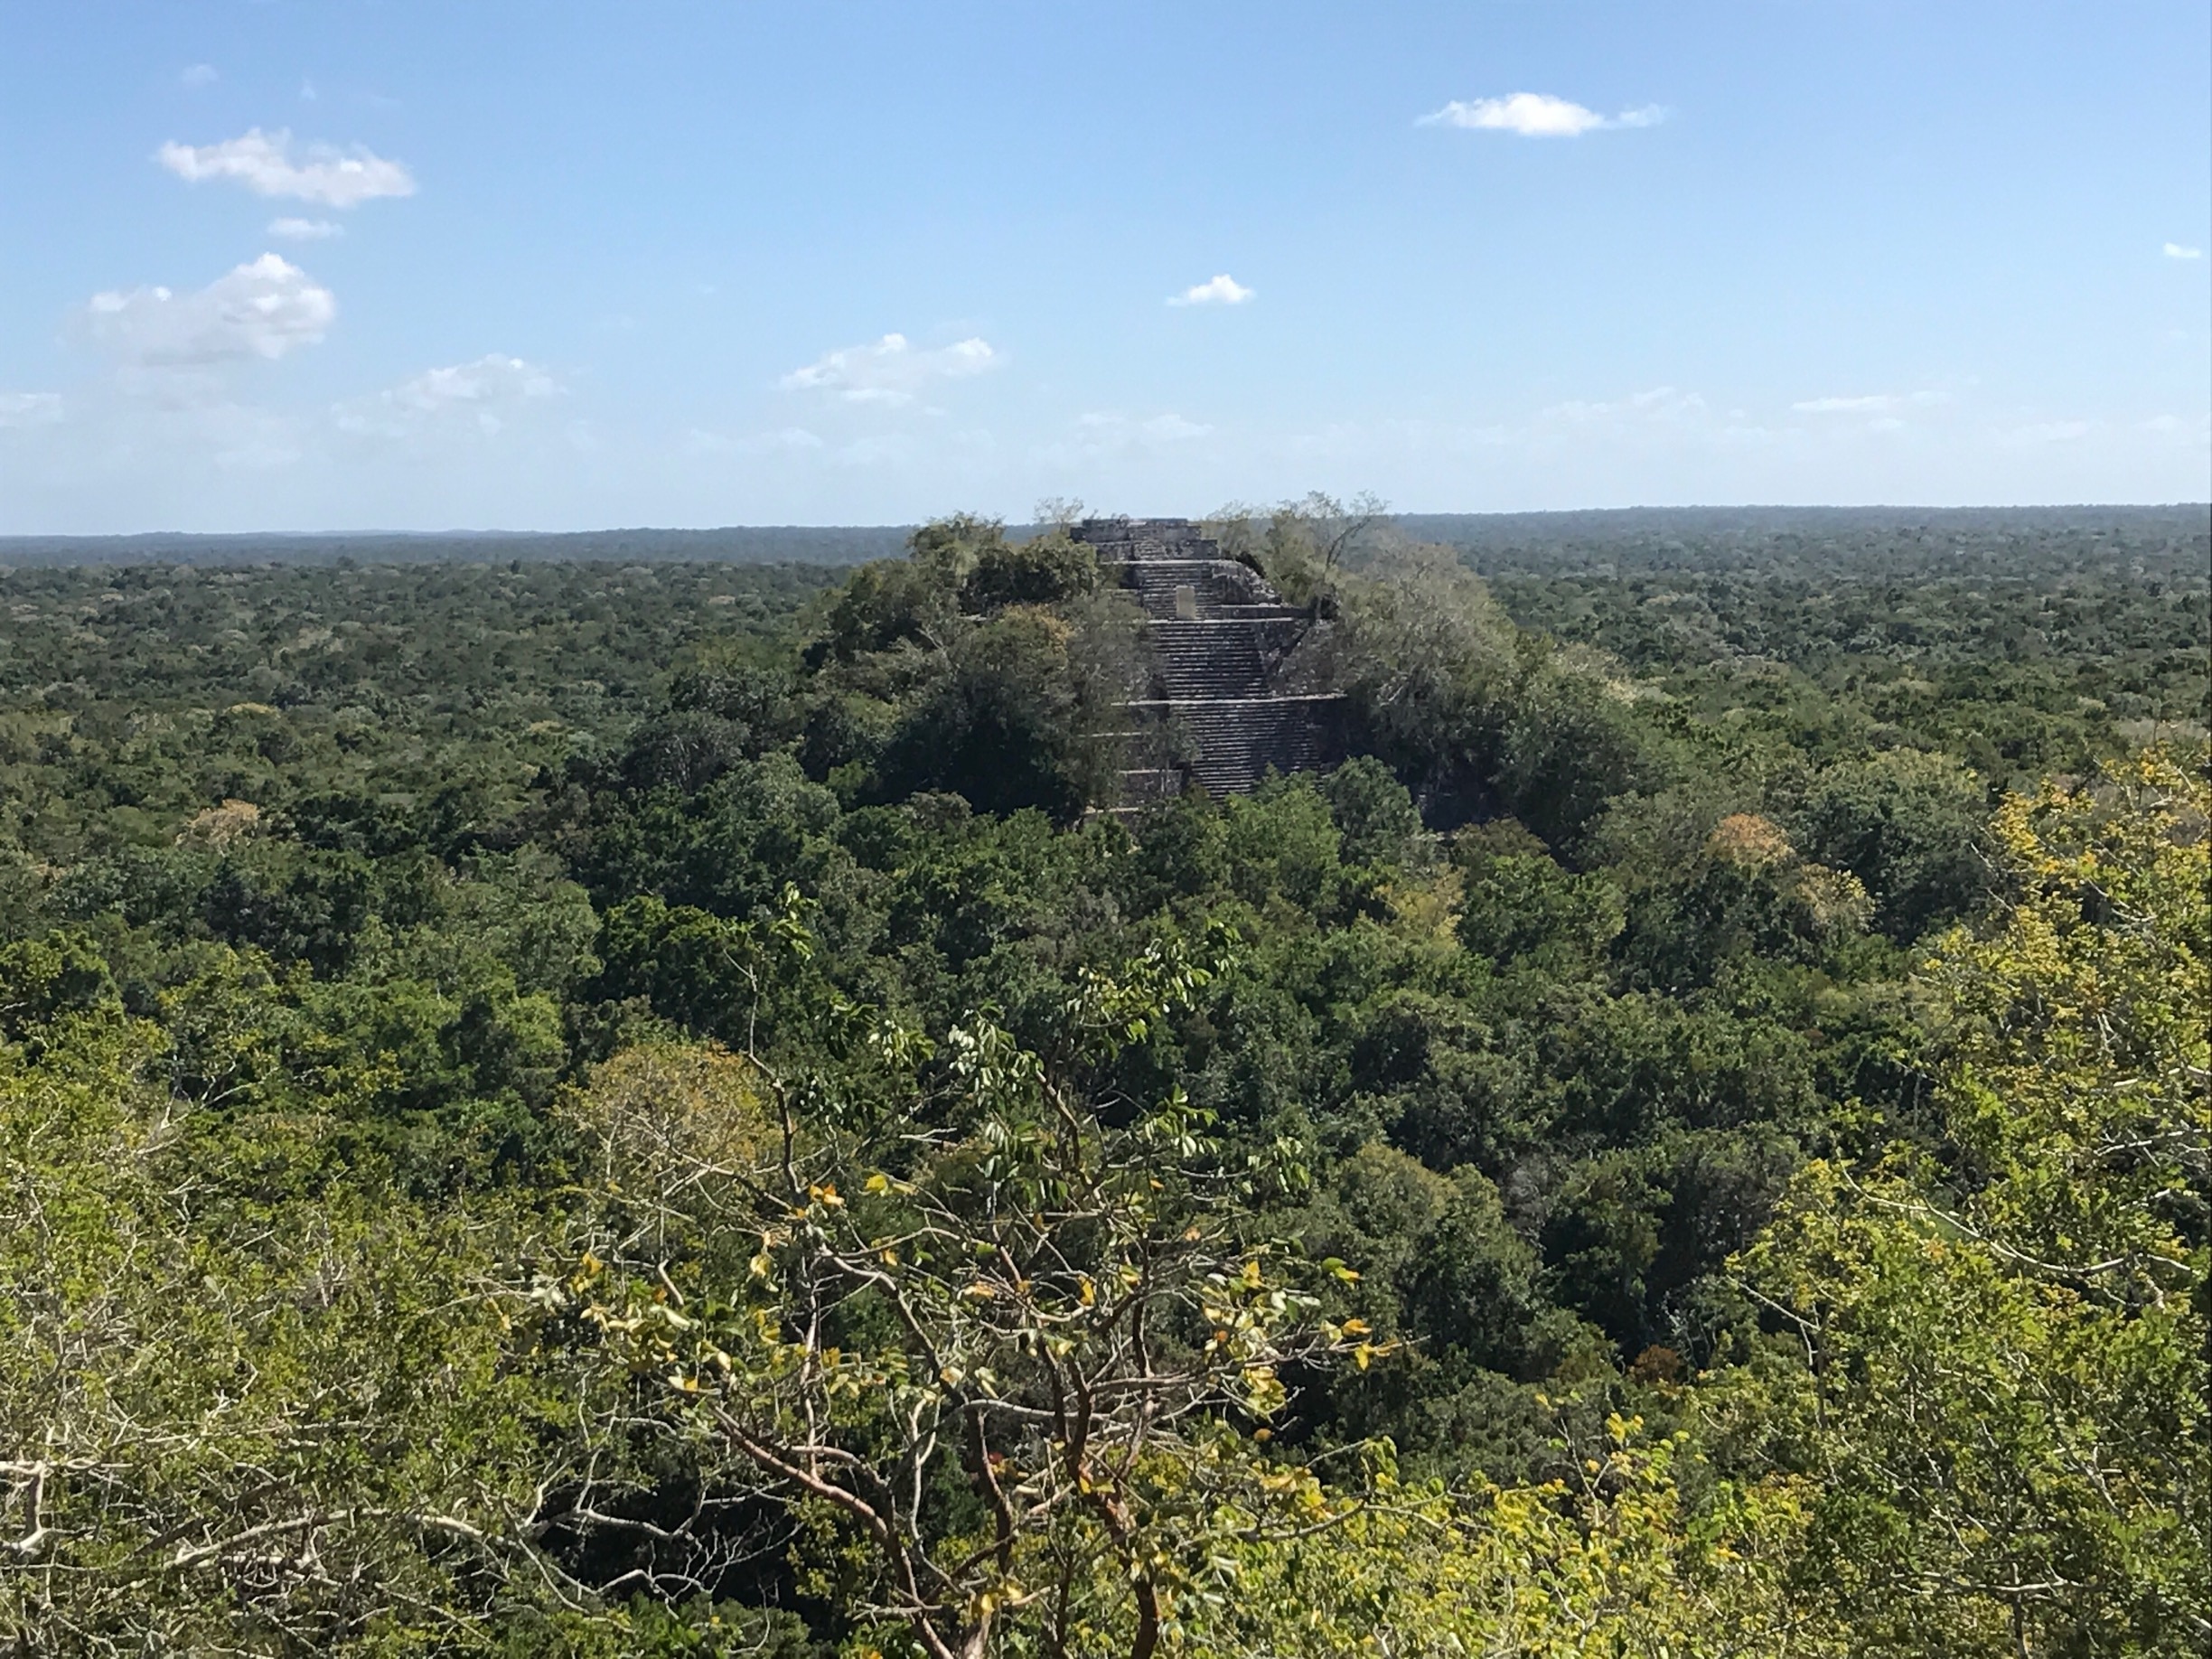 #calakmul #mayacivilization #mayanruins #pyramid #precolonialmexico #yucatanpeninsula #biospherereserve #jungle